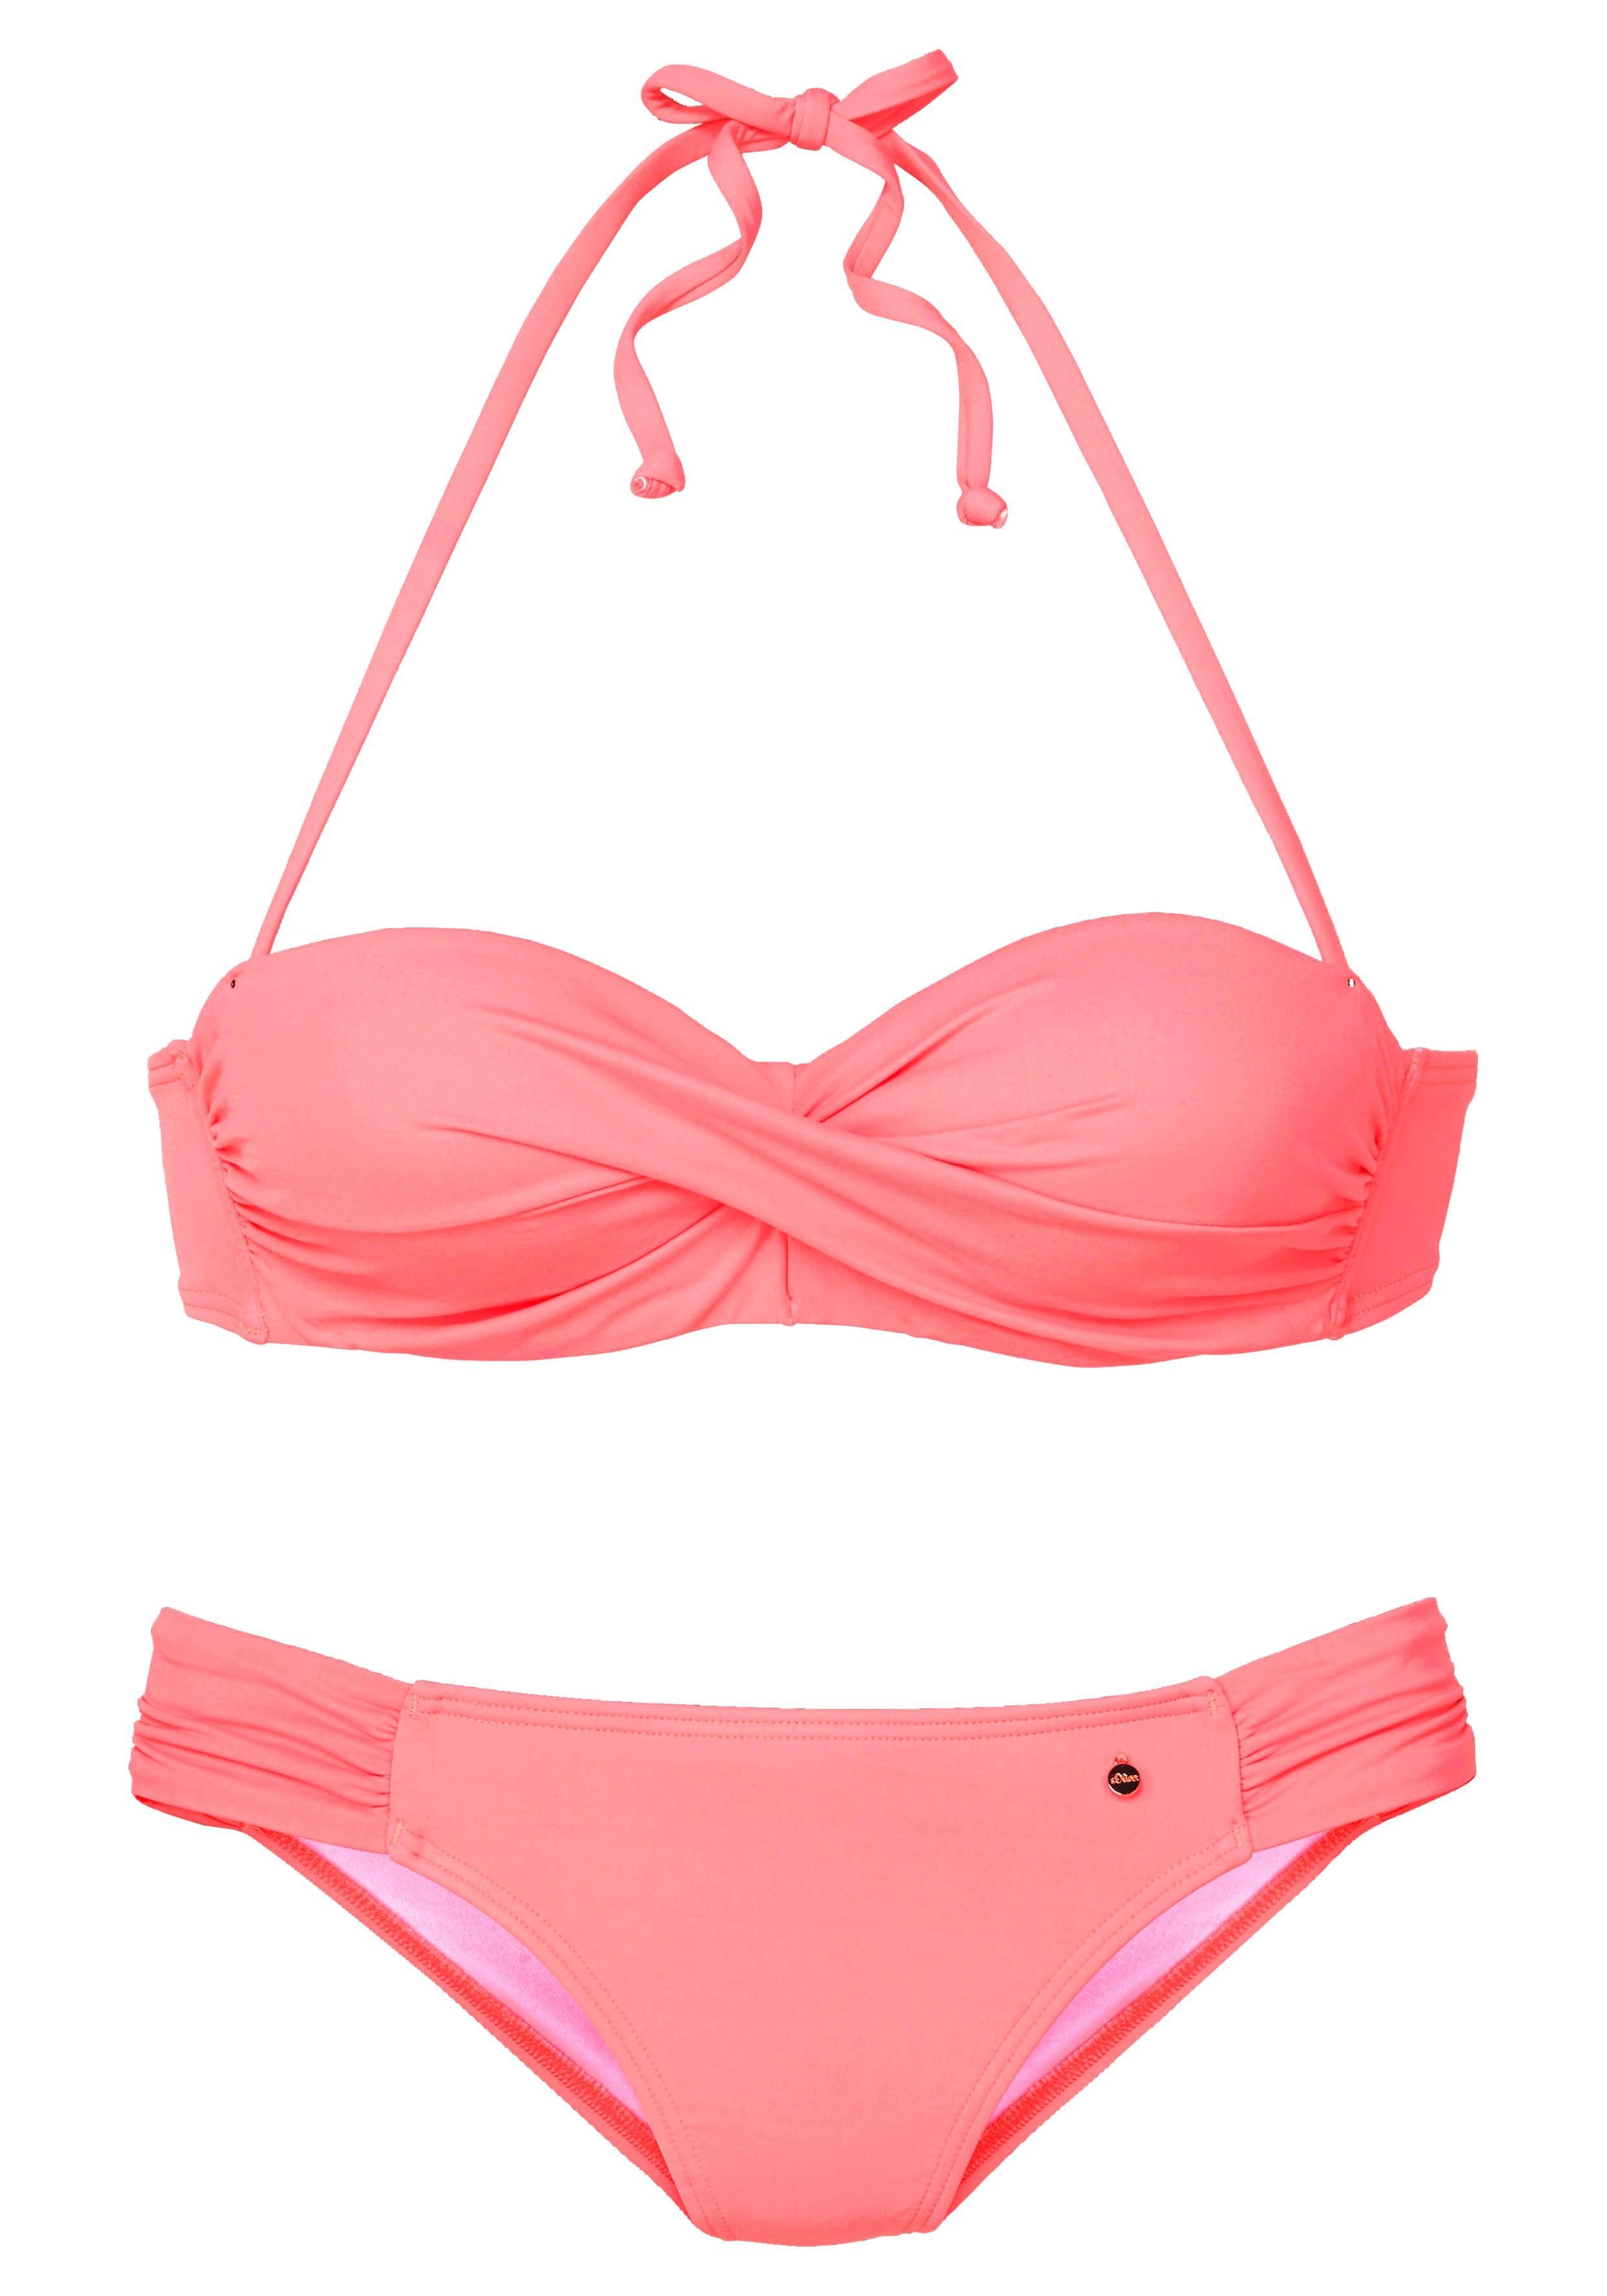 Raffung Bügel-Bandeau-Bikini mit s.Oliver apricot-neon